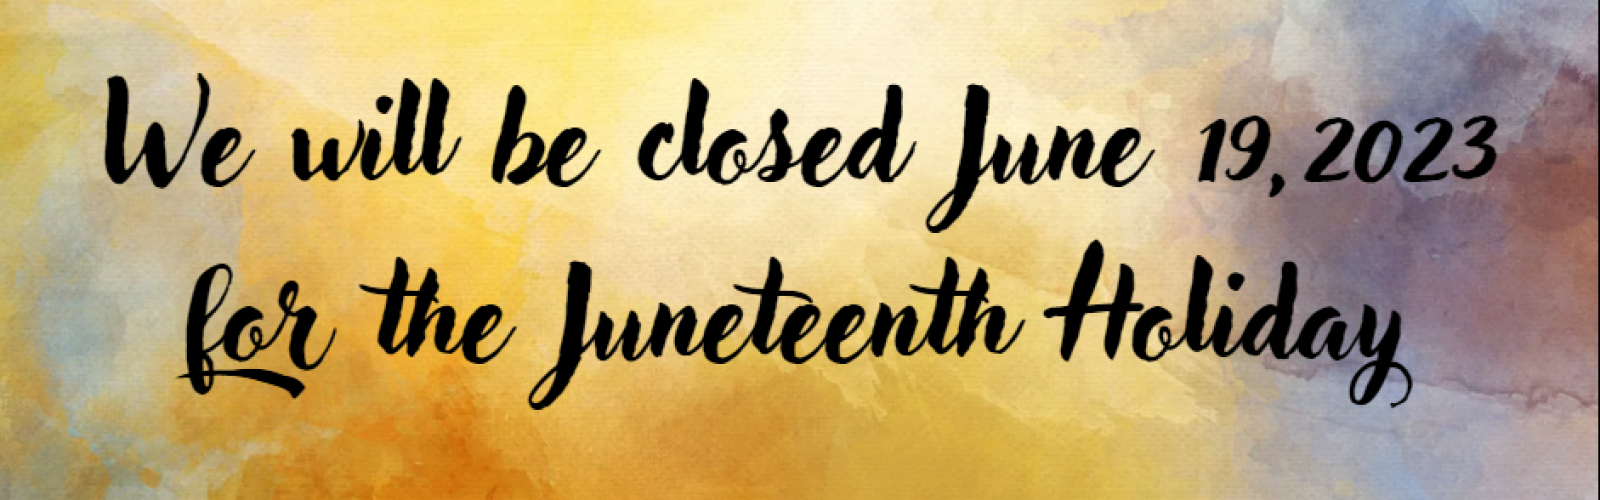 Closed Juneteenth